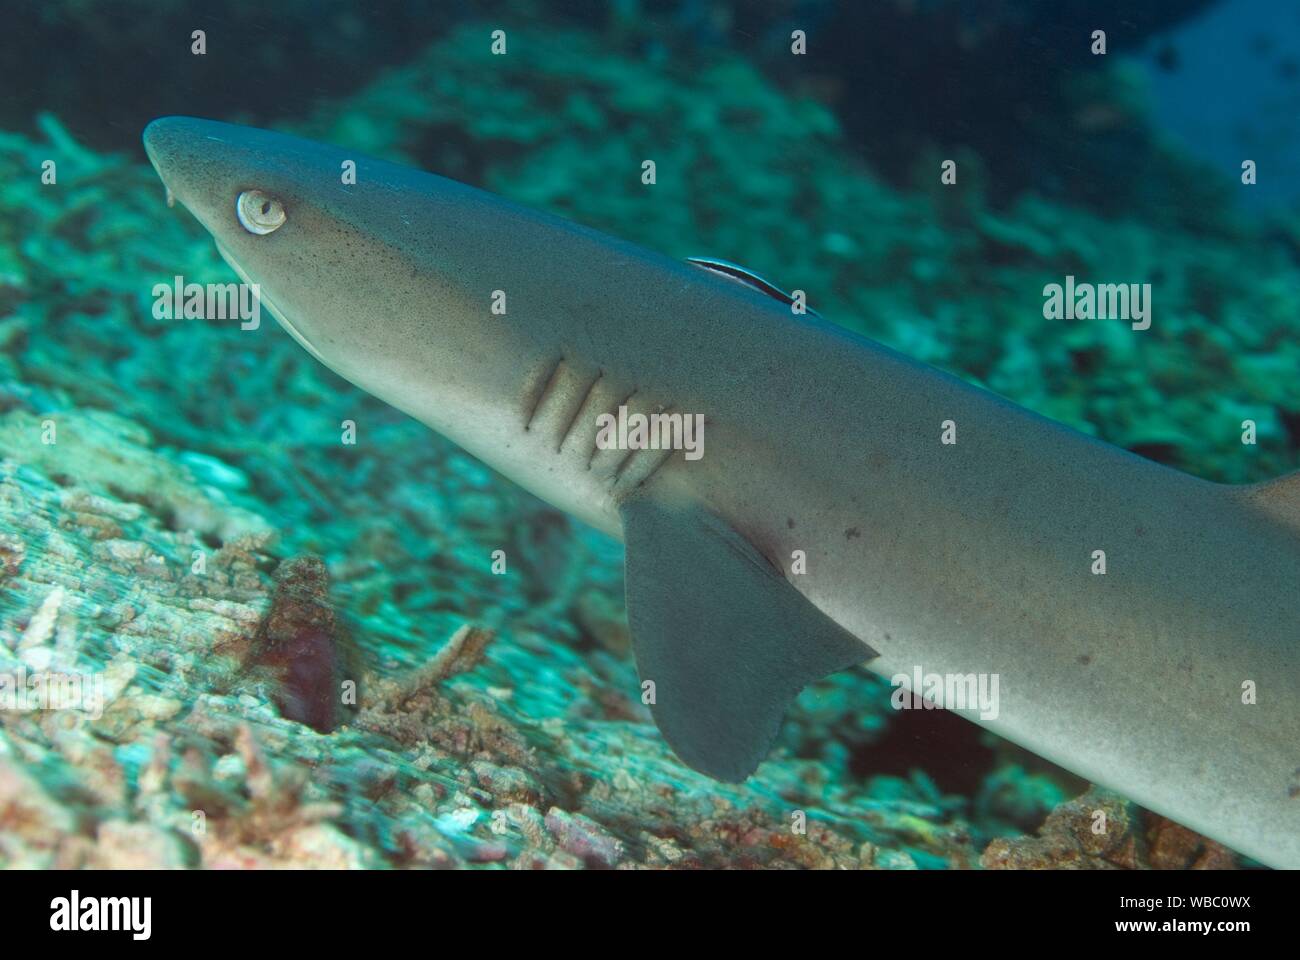 Whitetip Reef Shark (Triaenodon obesus, Carcharhinidae famiglia) con Sharksucker (Echeneis naucrates, famiglia Echeneidae), Staghorn Crest sito di immersione, Foto Stock